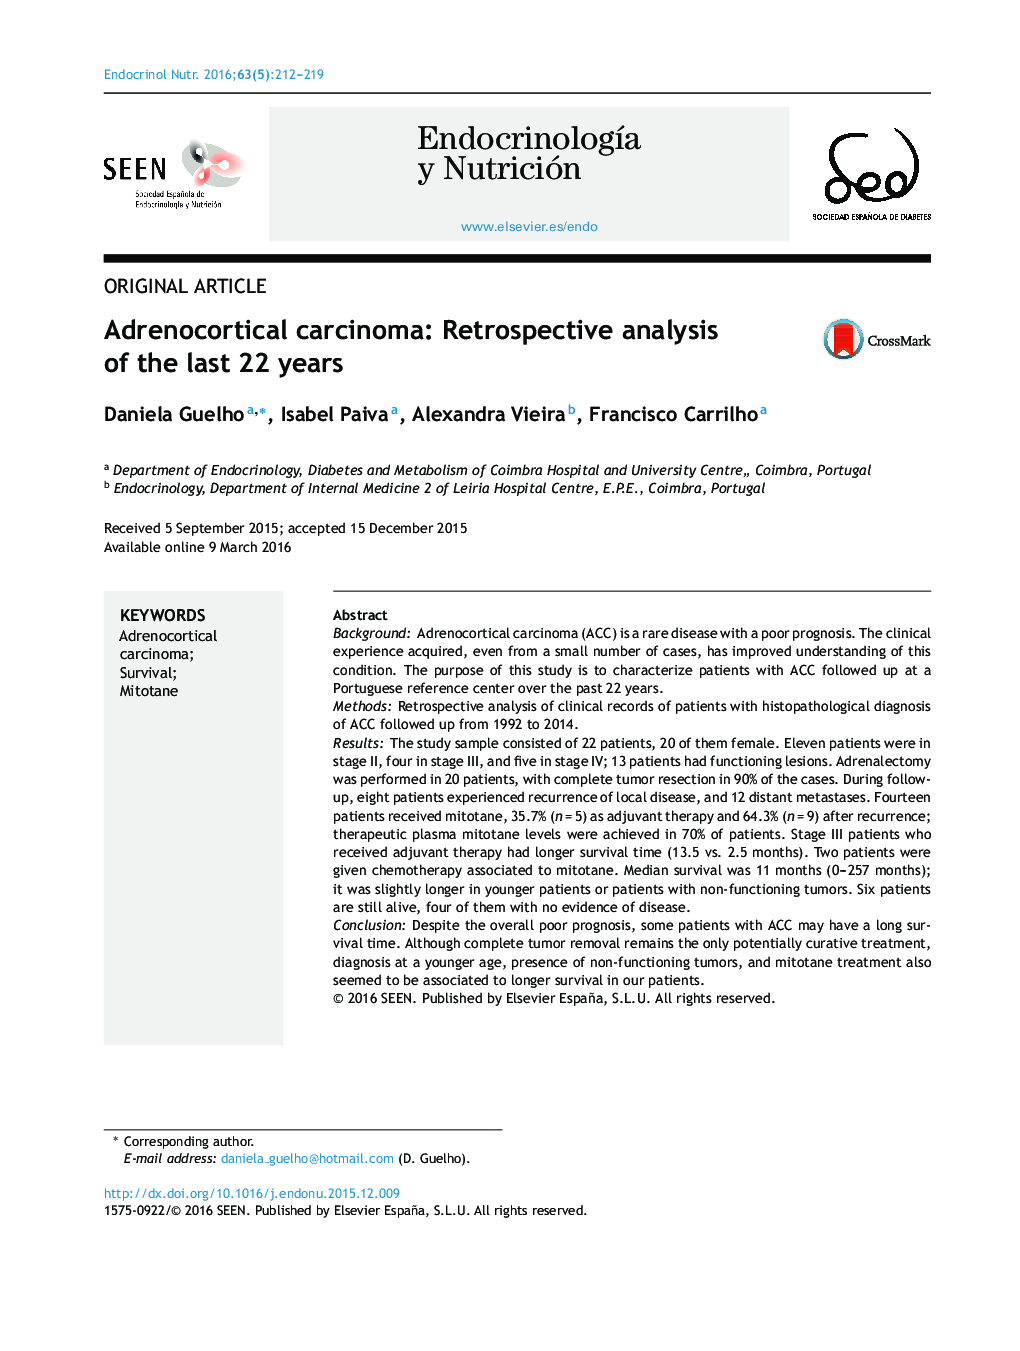 Adrenocortical carcinoma: Retrospective analysis of the last 22 years